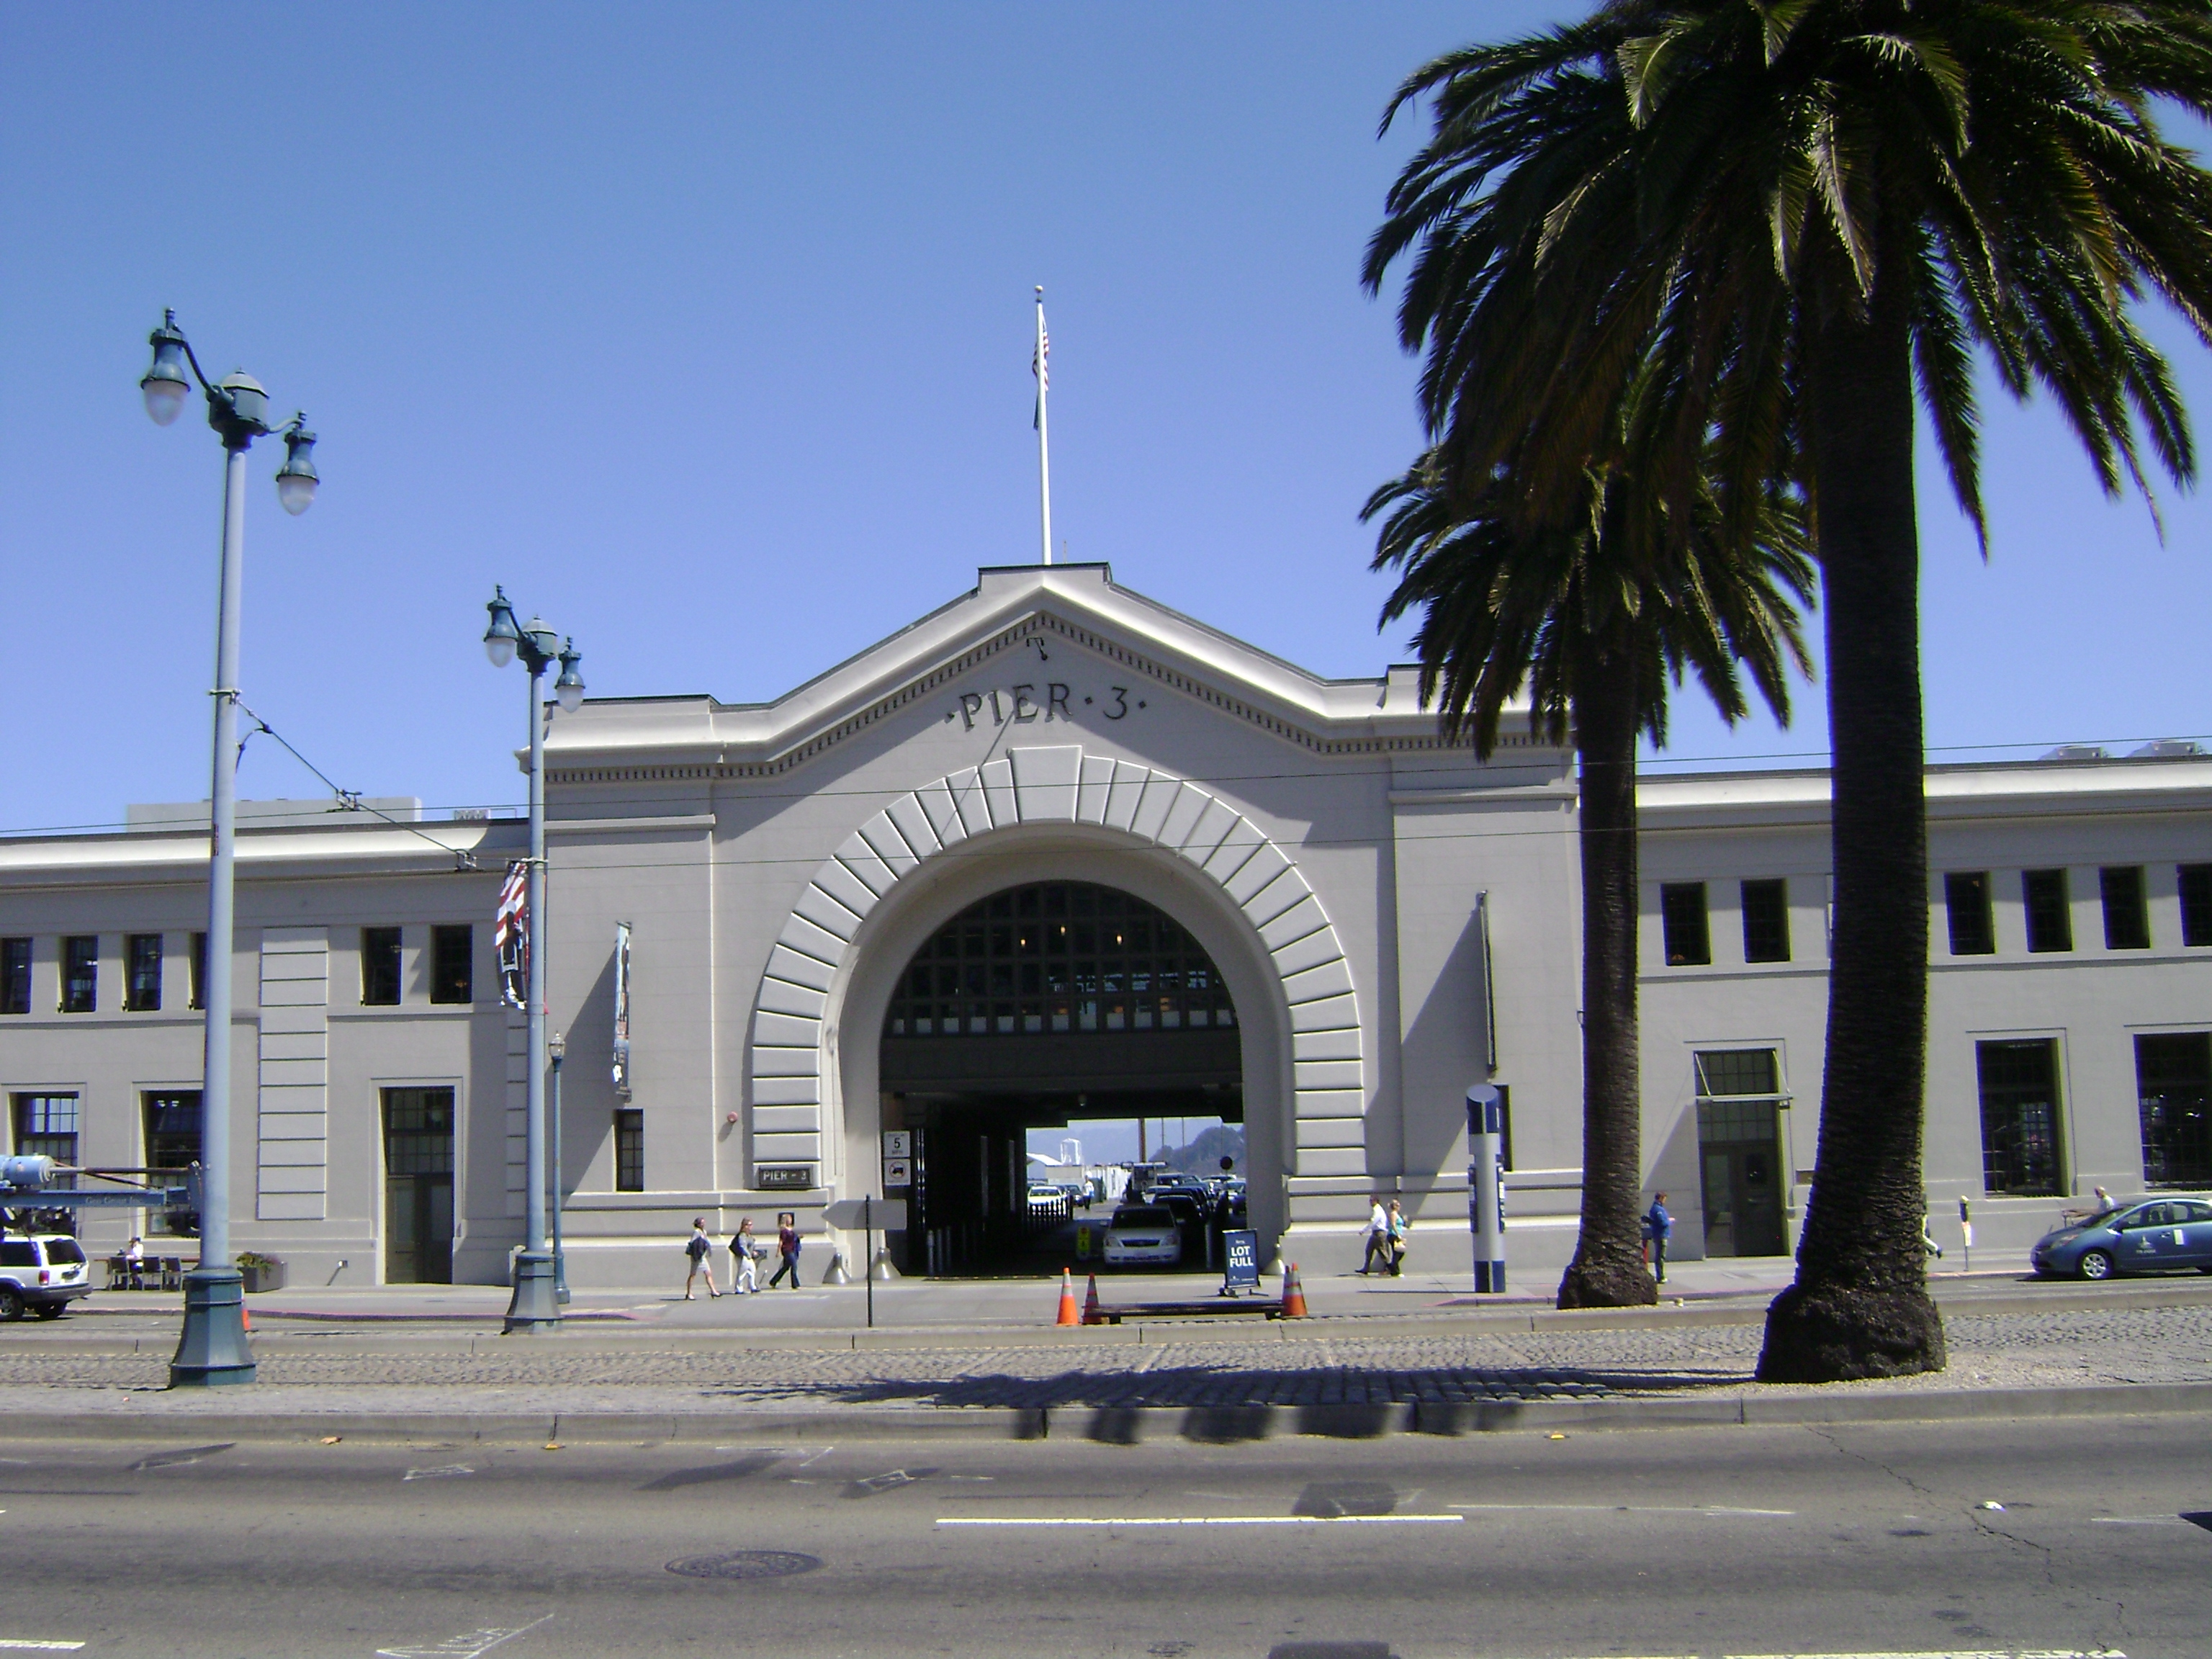 File:Pier 3, San Francisco.JPG - Wikimedia Commons